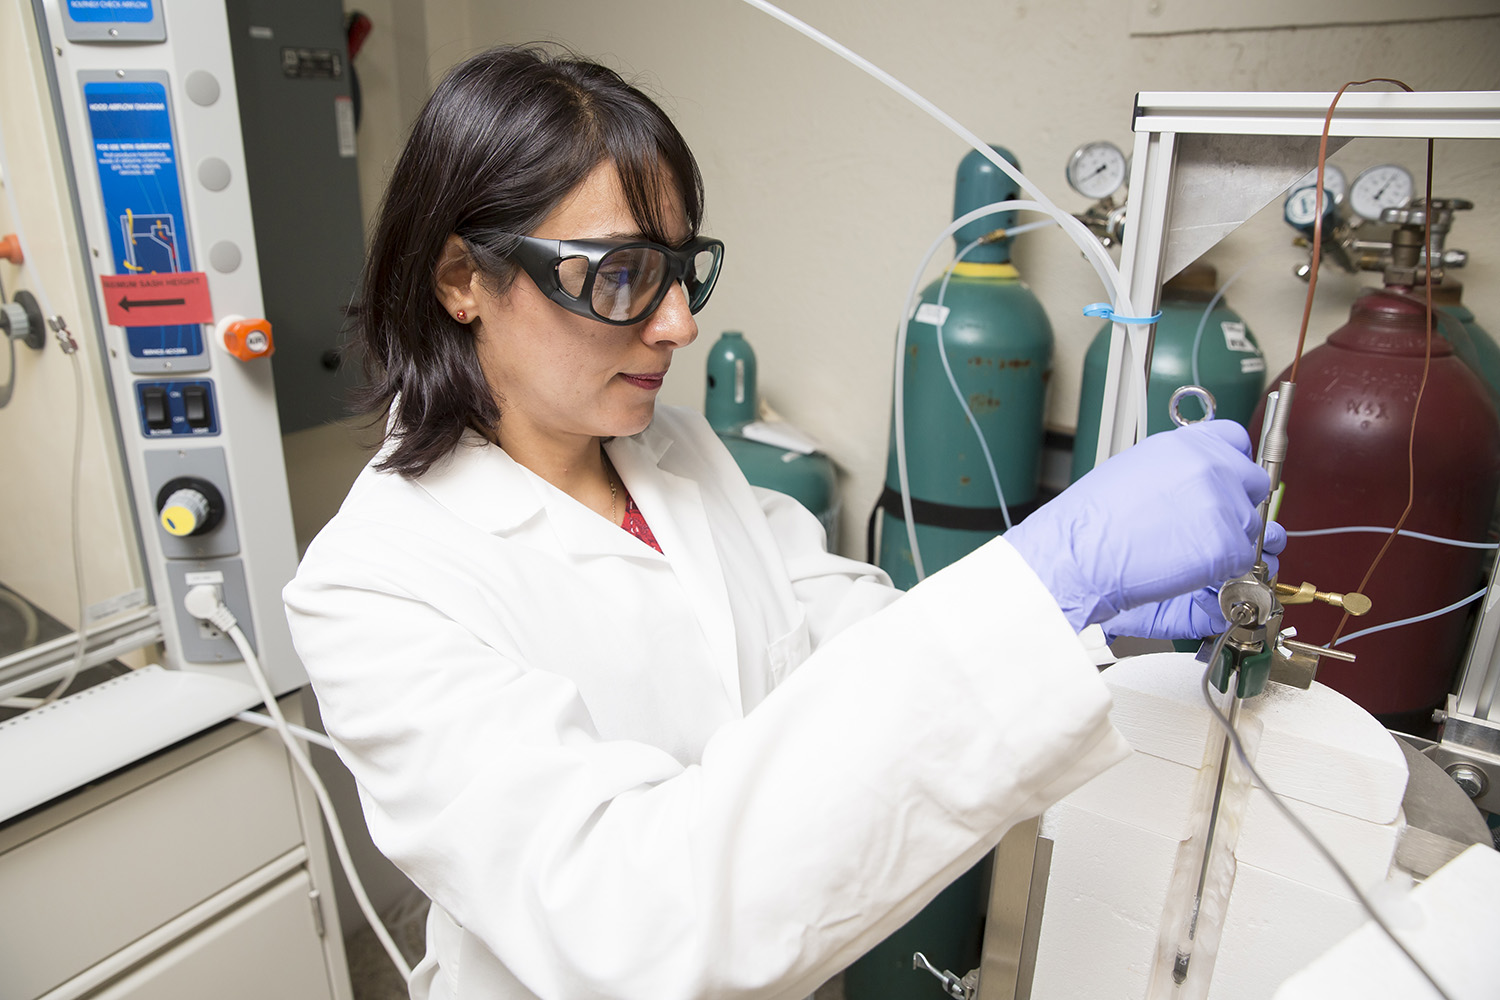 Sheima Khatib in the lab